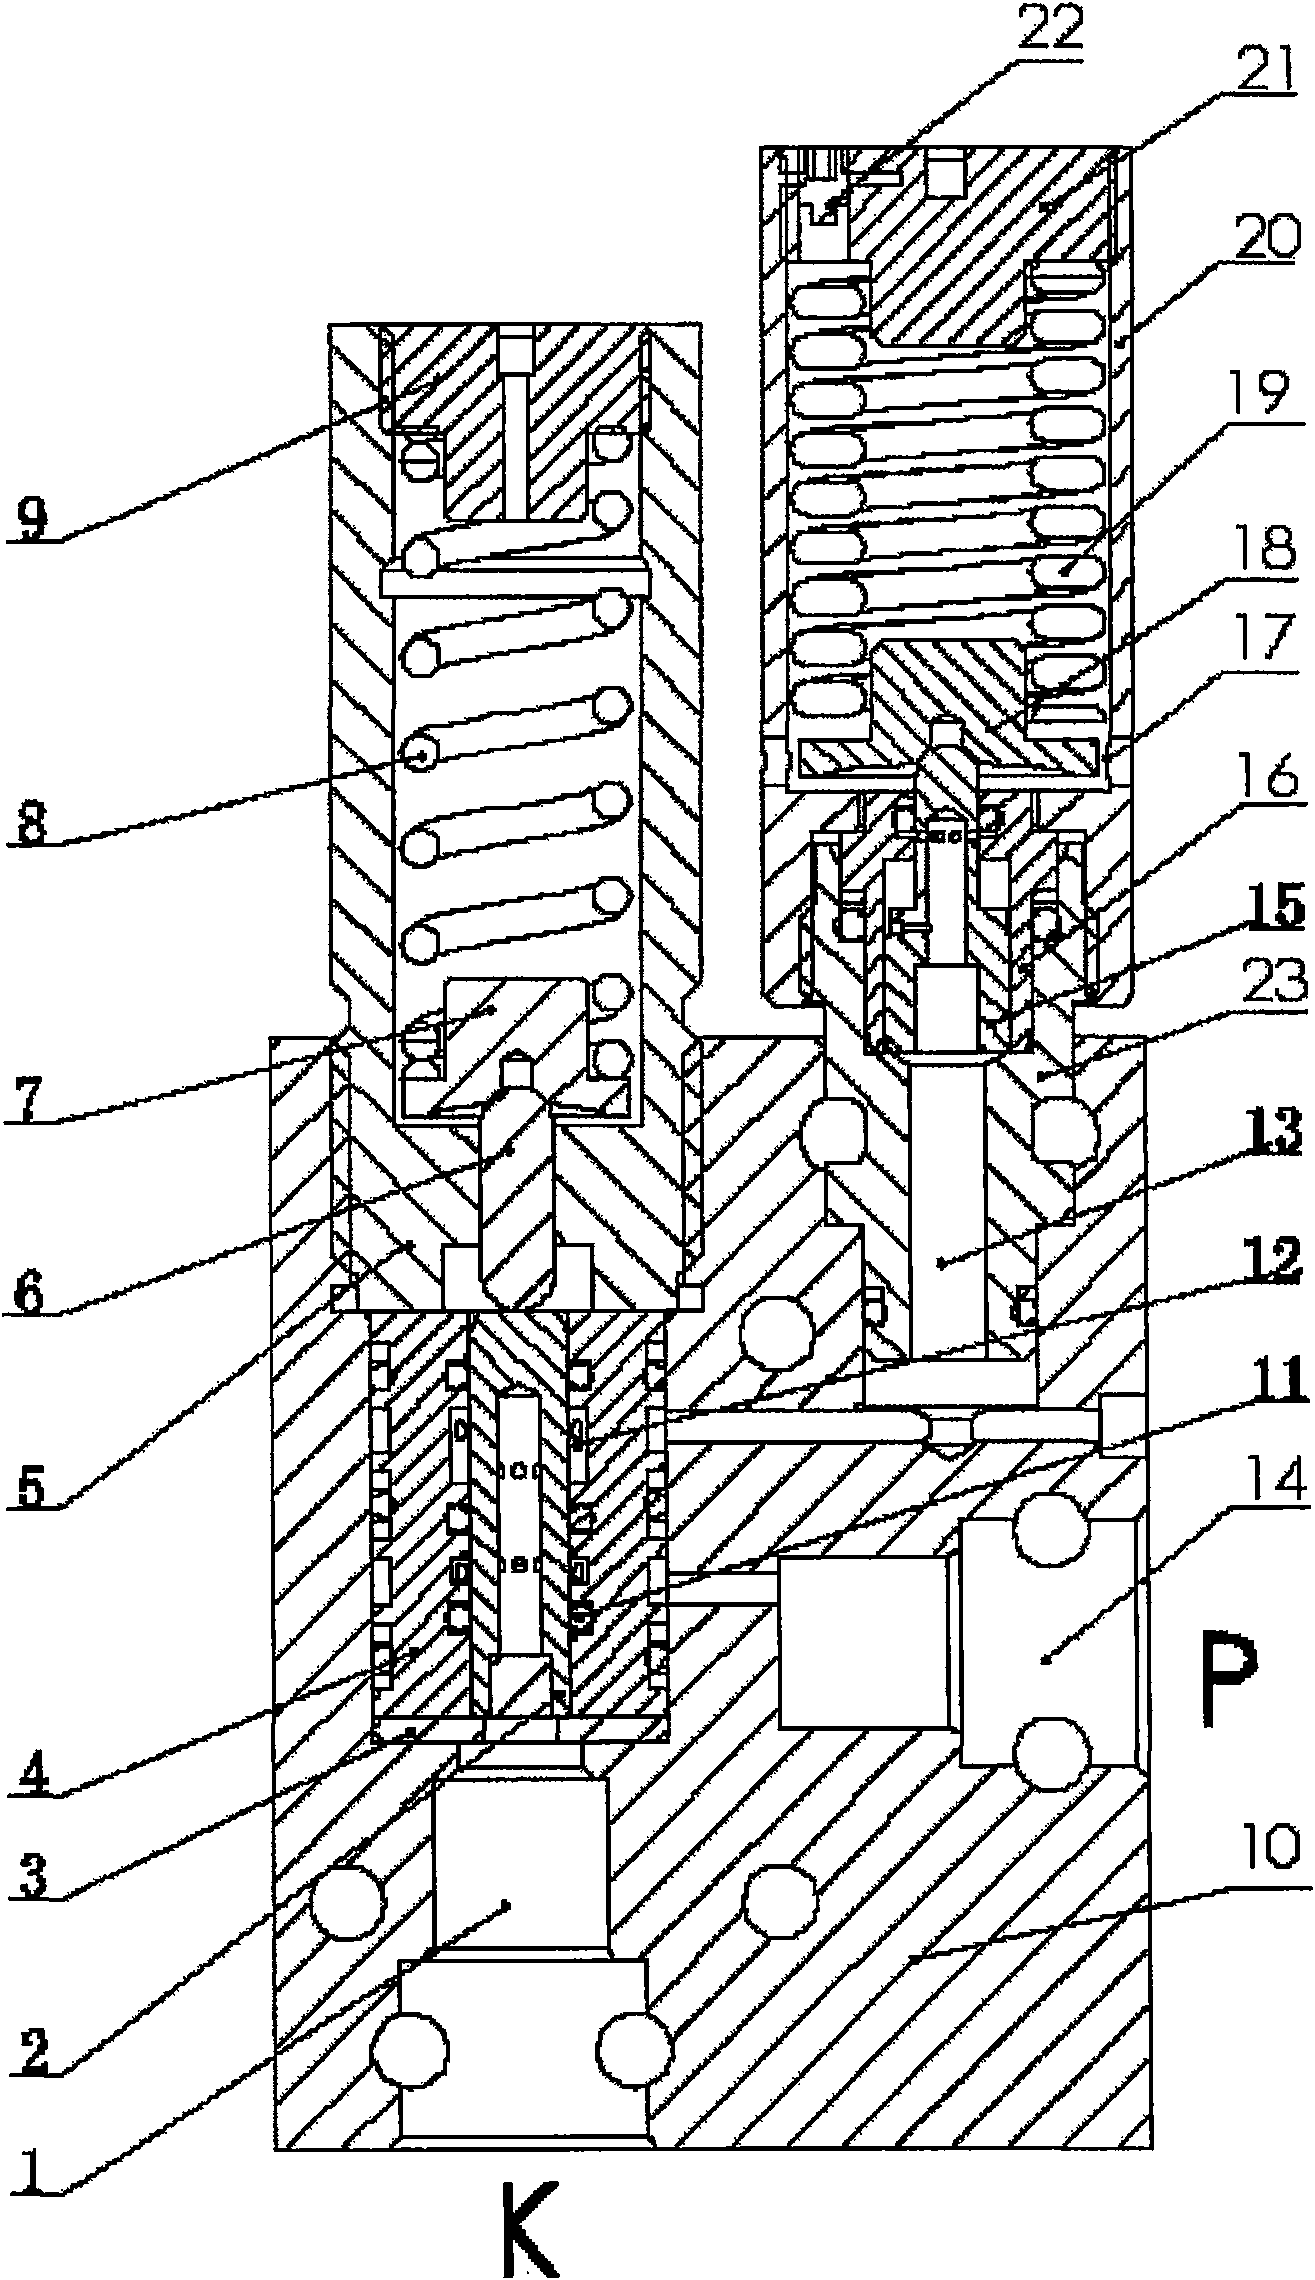 Multilevel control valve